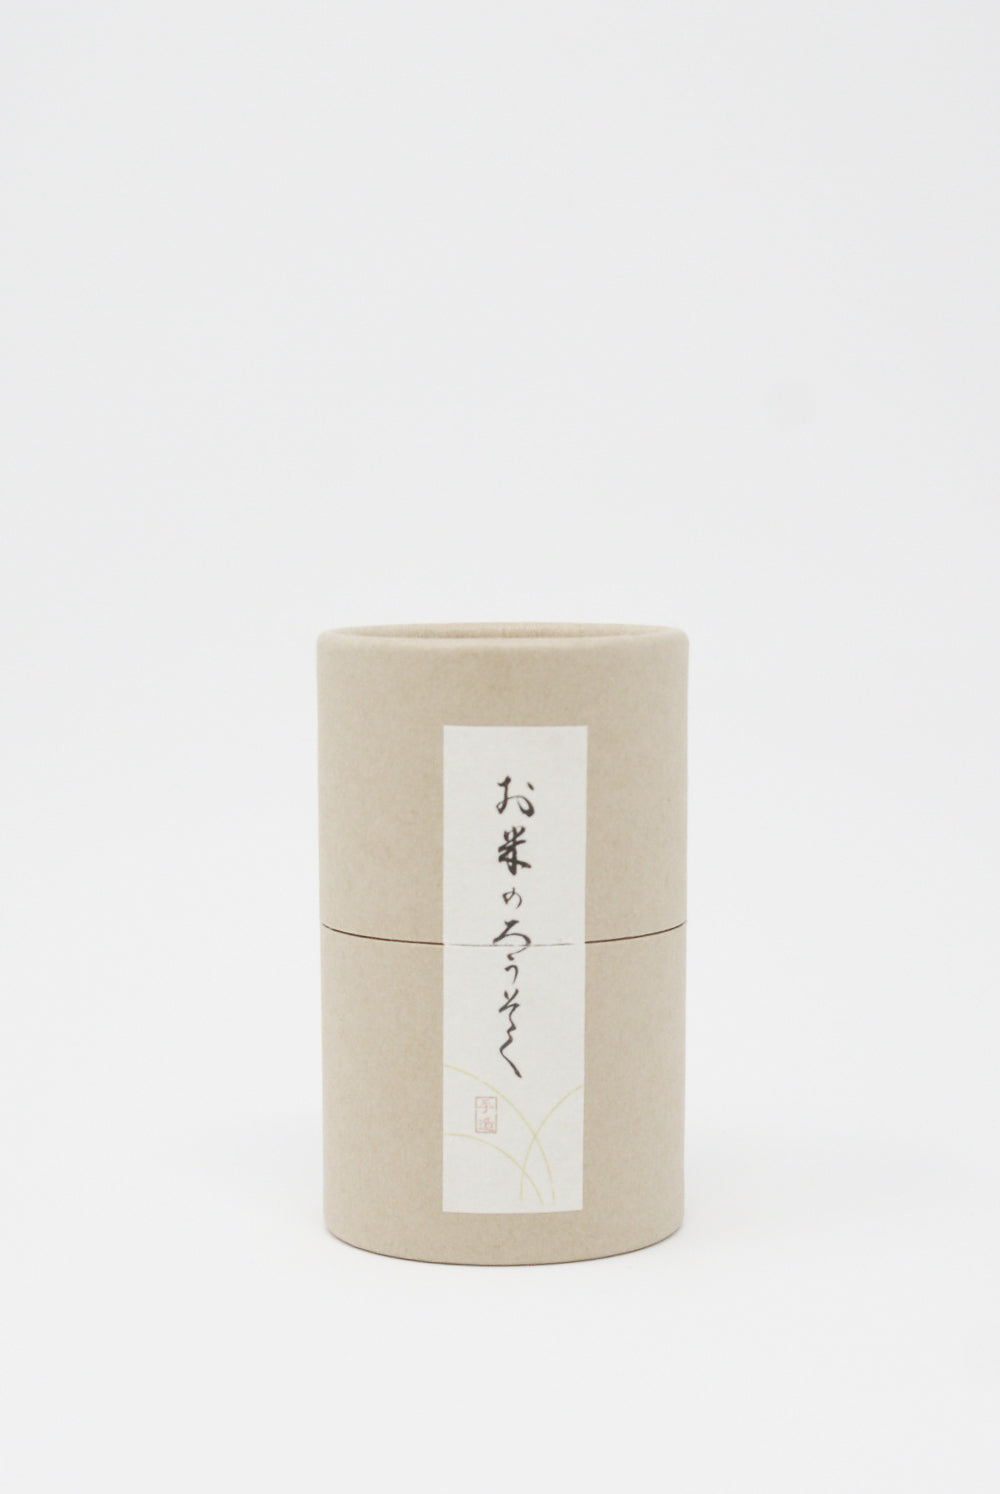 Daiyo - Rice Wax Candle - 20-Piece Pack box detail